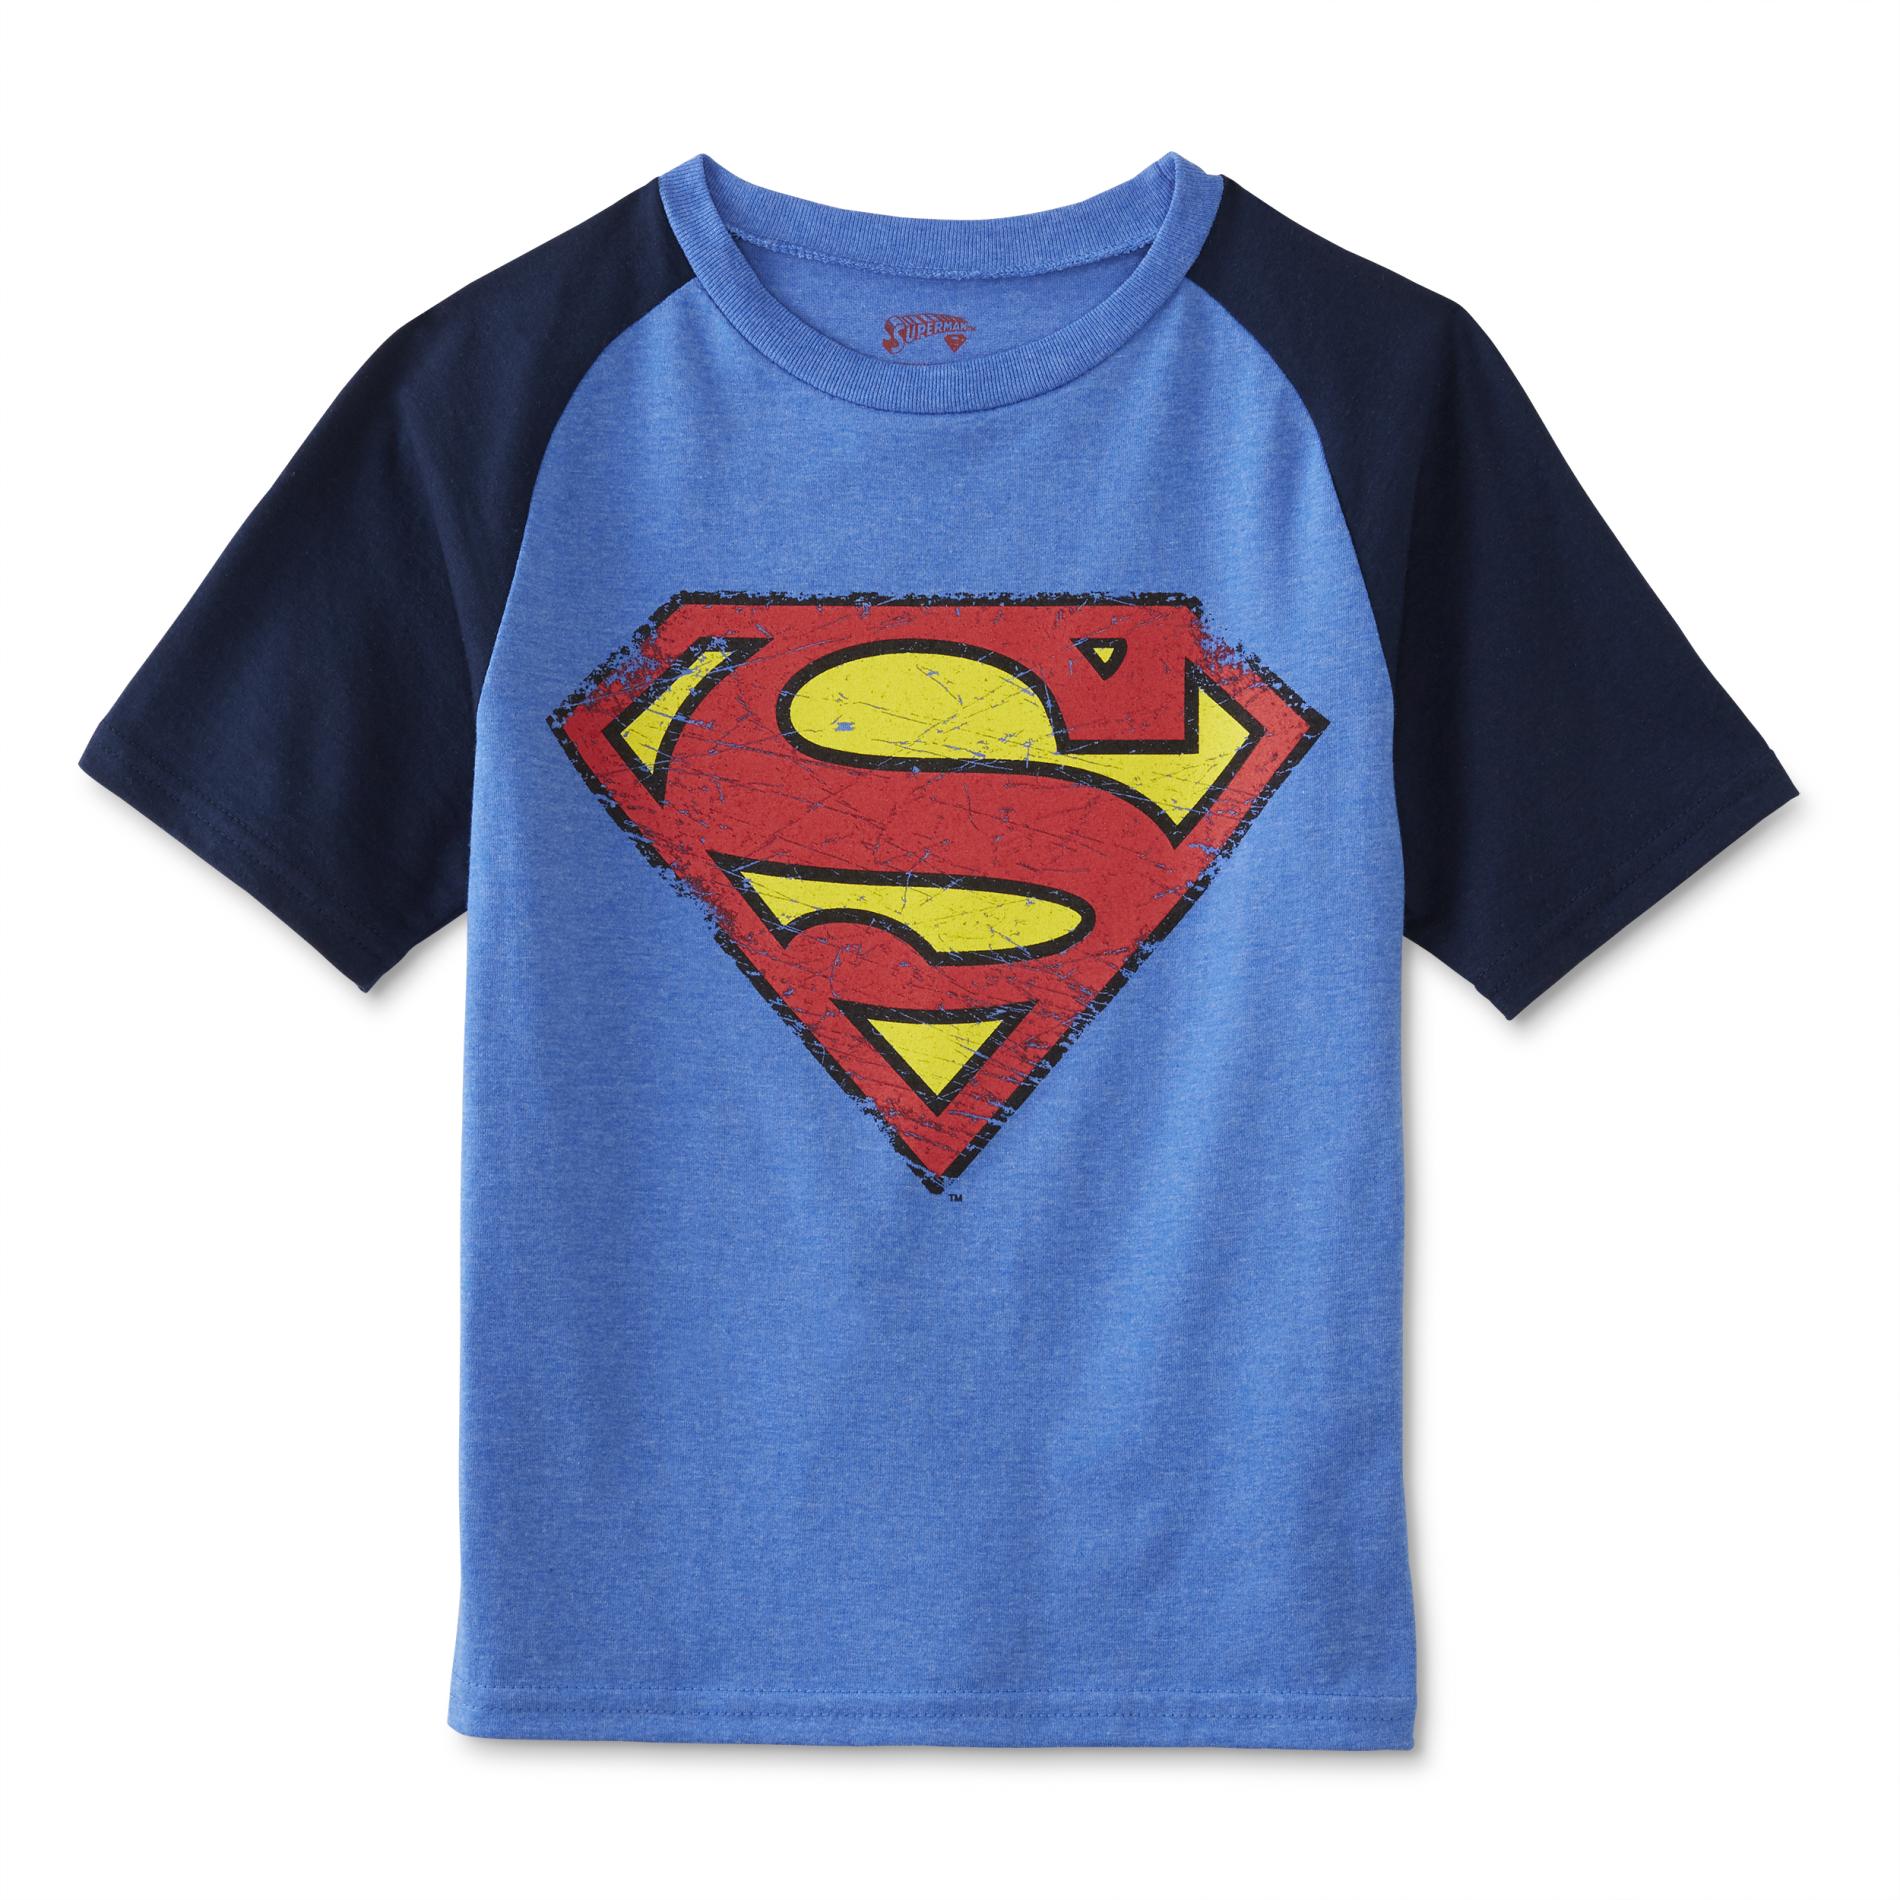 Superman Boys' Graphic T-Shirt - Emblem